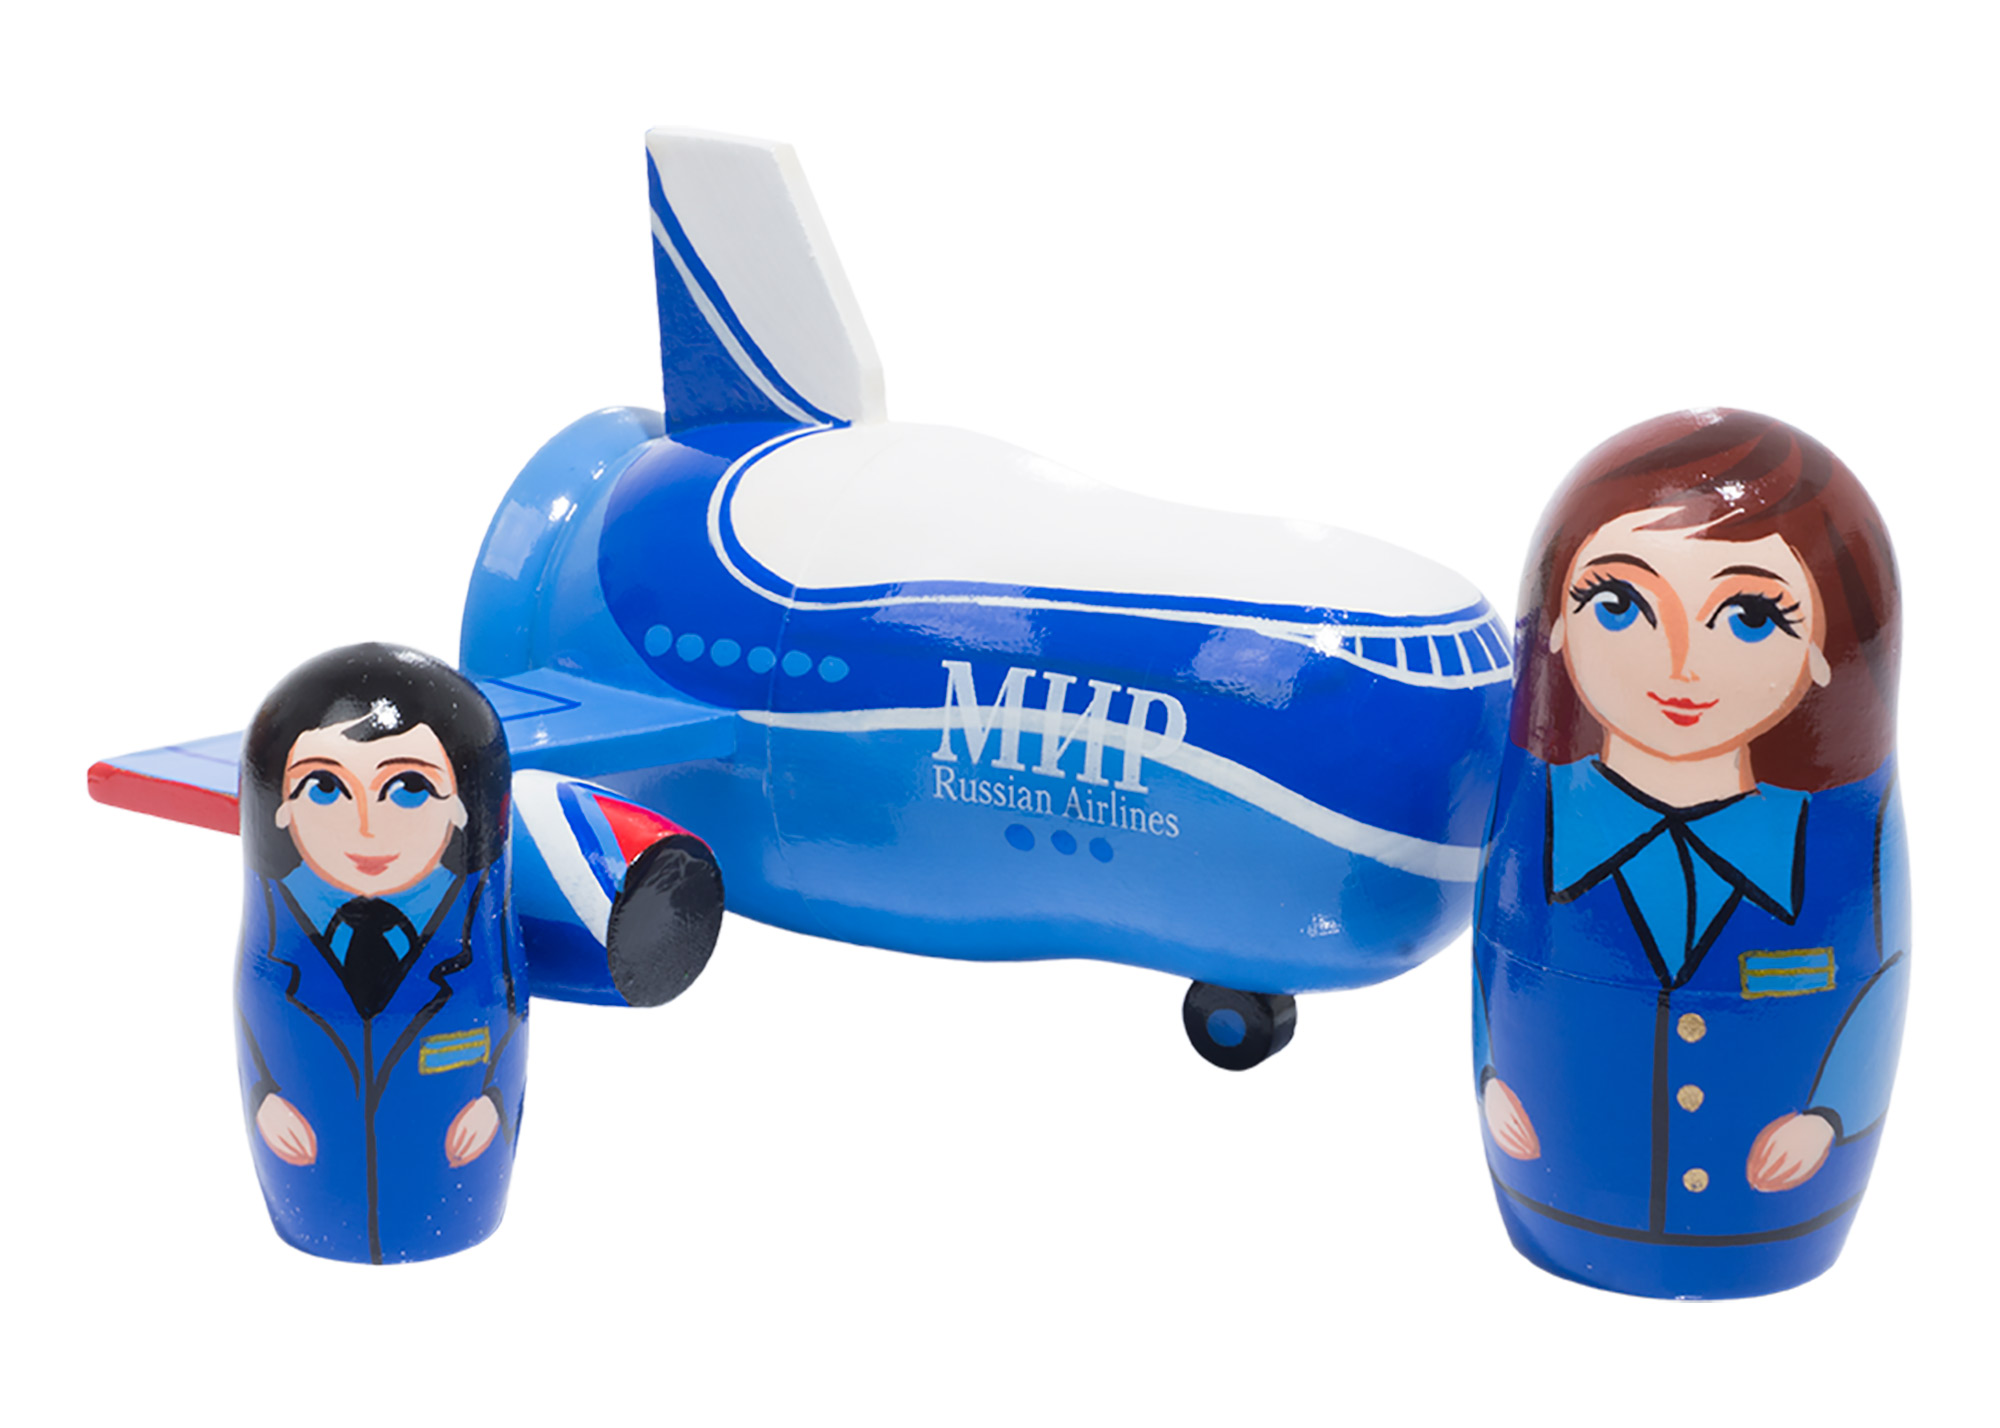 Buy MIR Airplane Nesting Doll 3pc./4" at GoldenCockerel.com